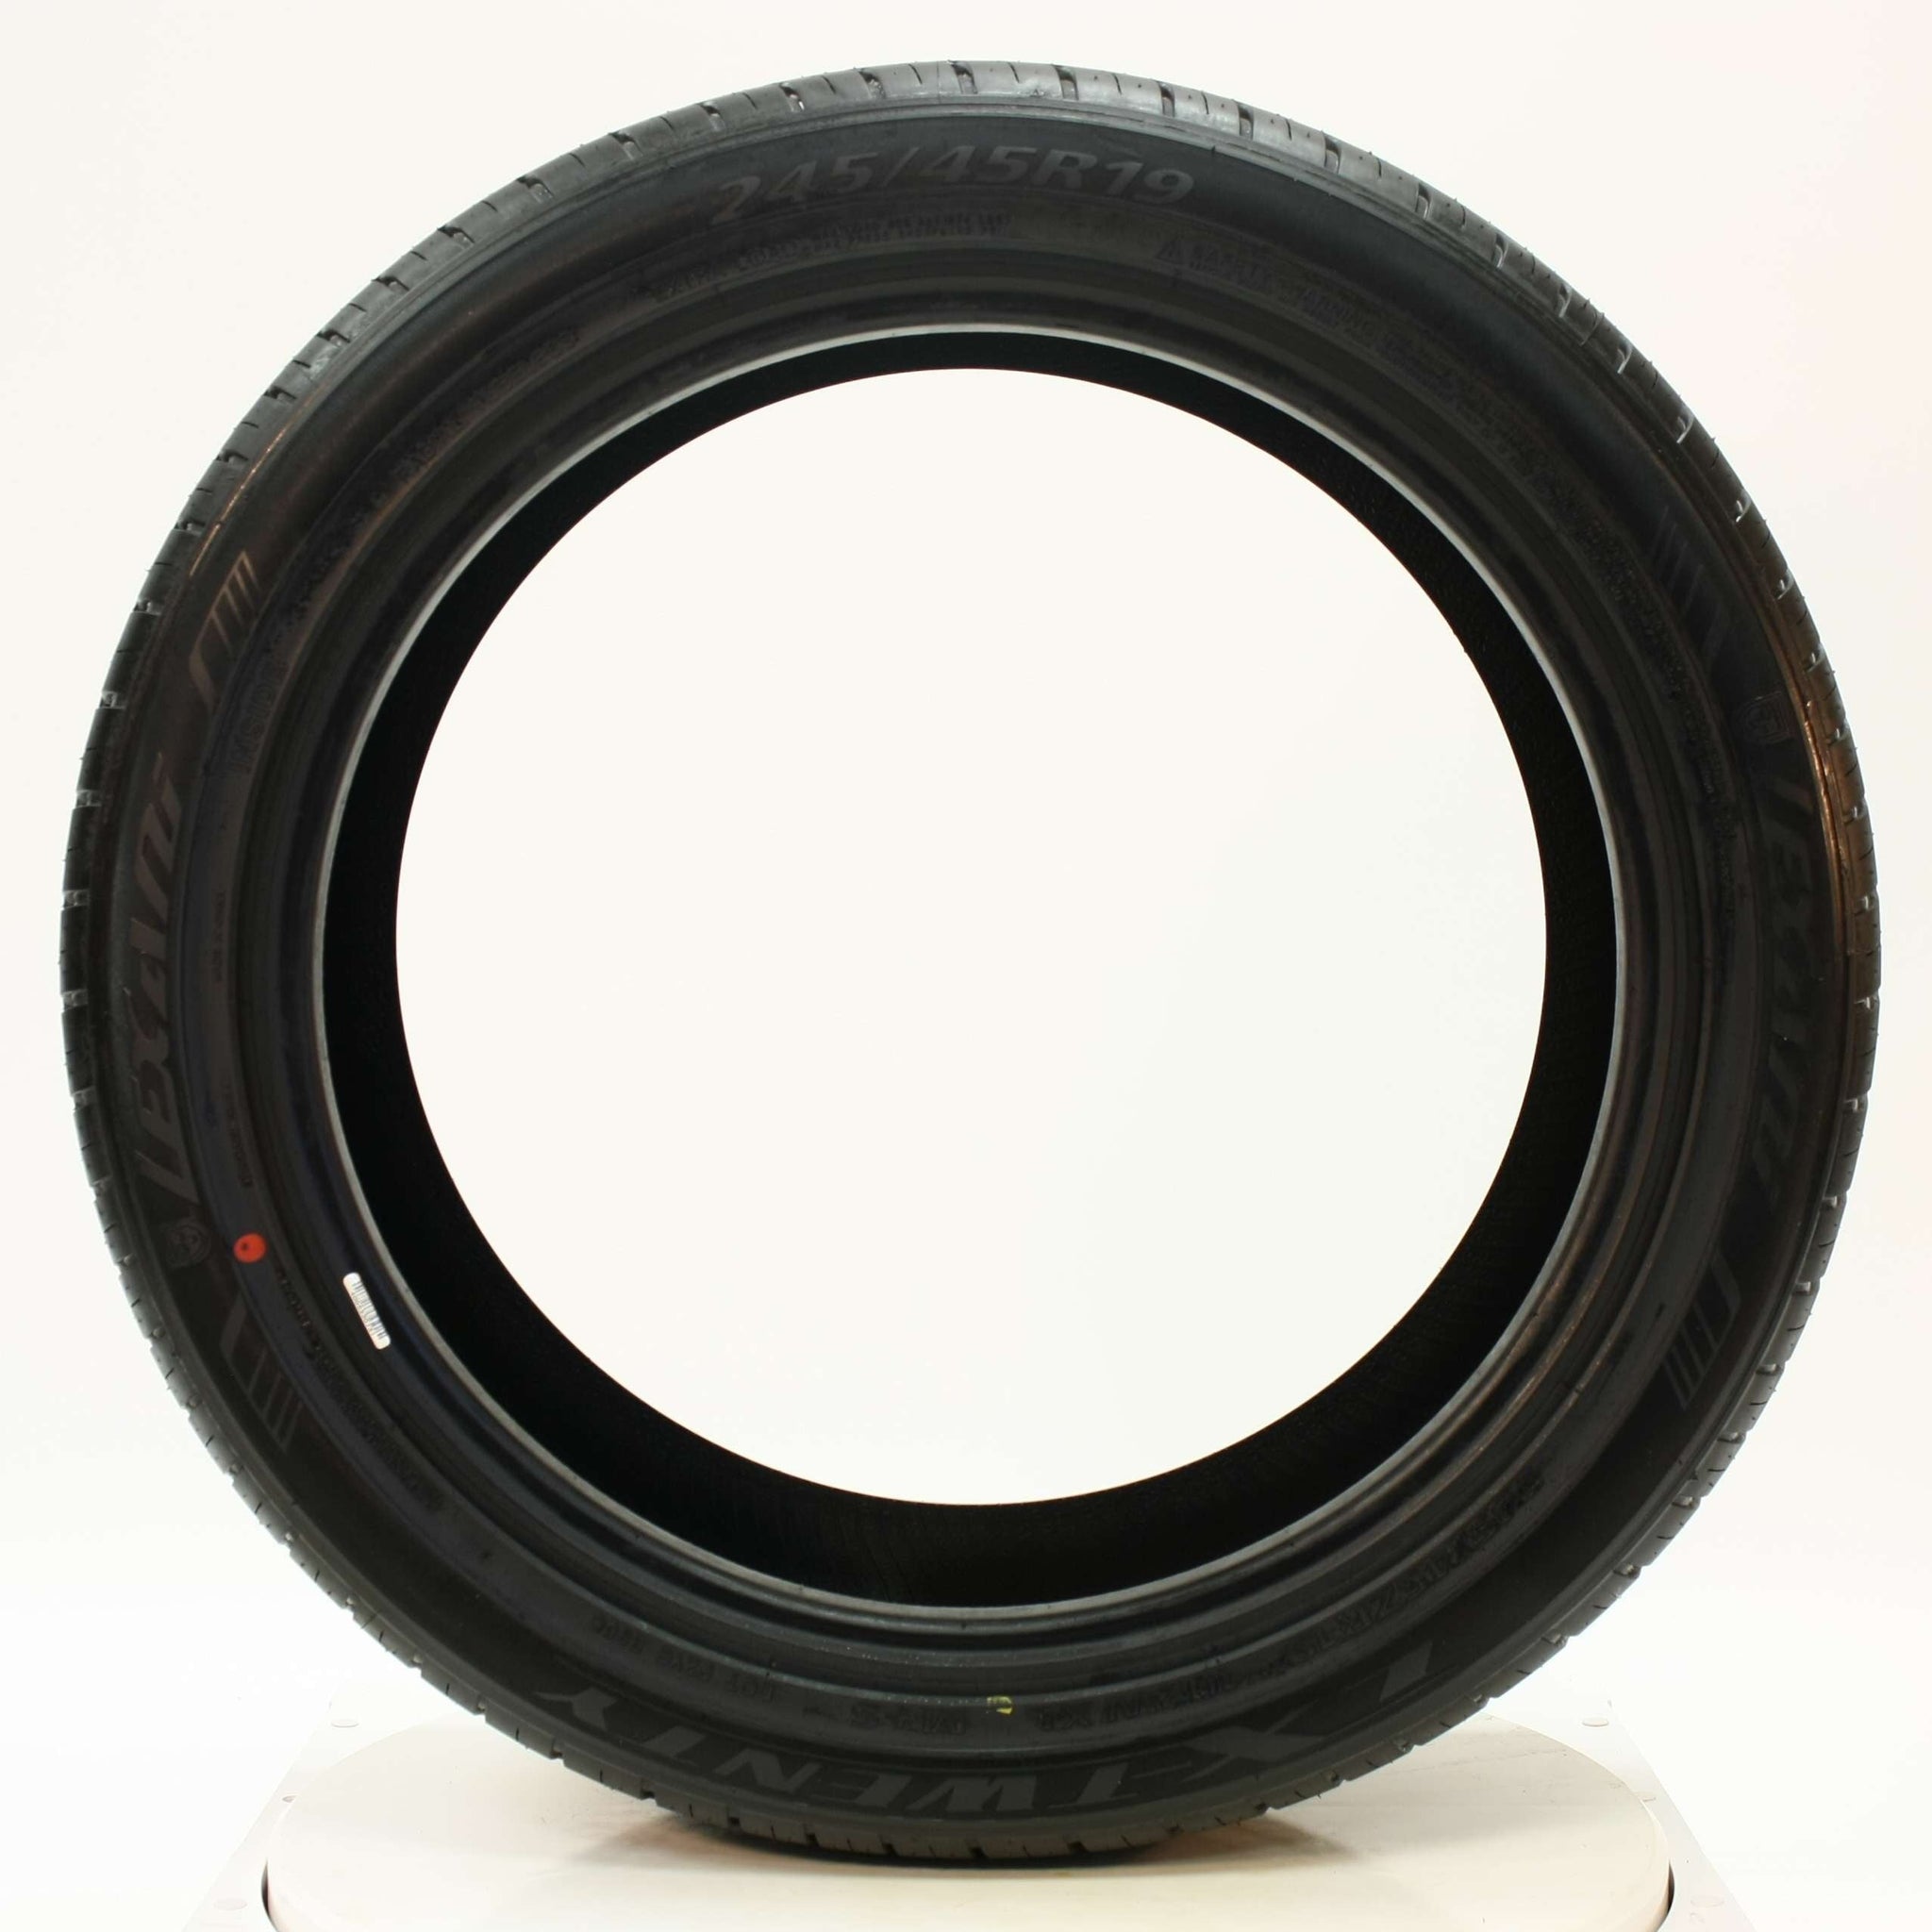 LEXANI LX-TWENTY 265/30ZR22 (28.3X10.7R 22) Tires